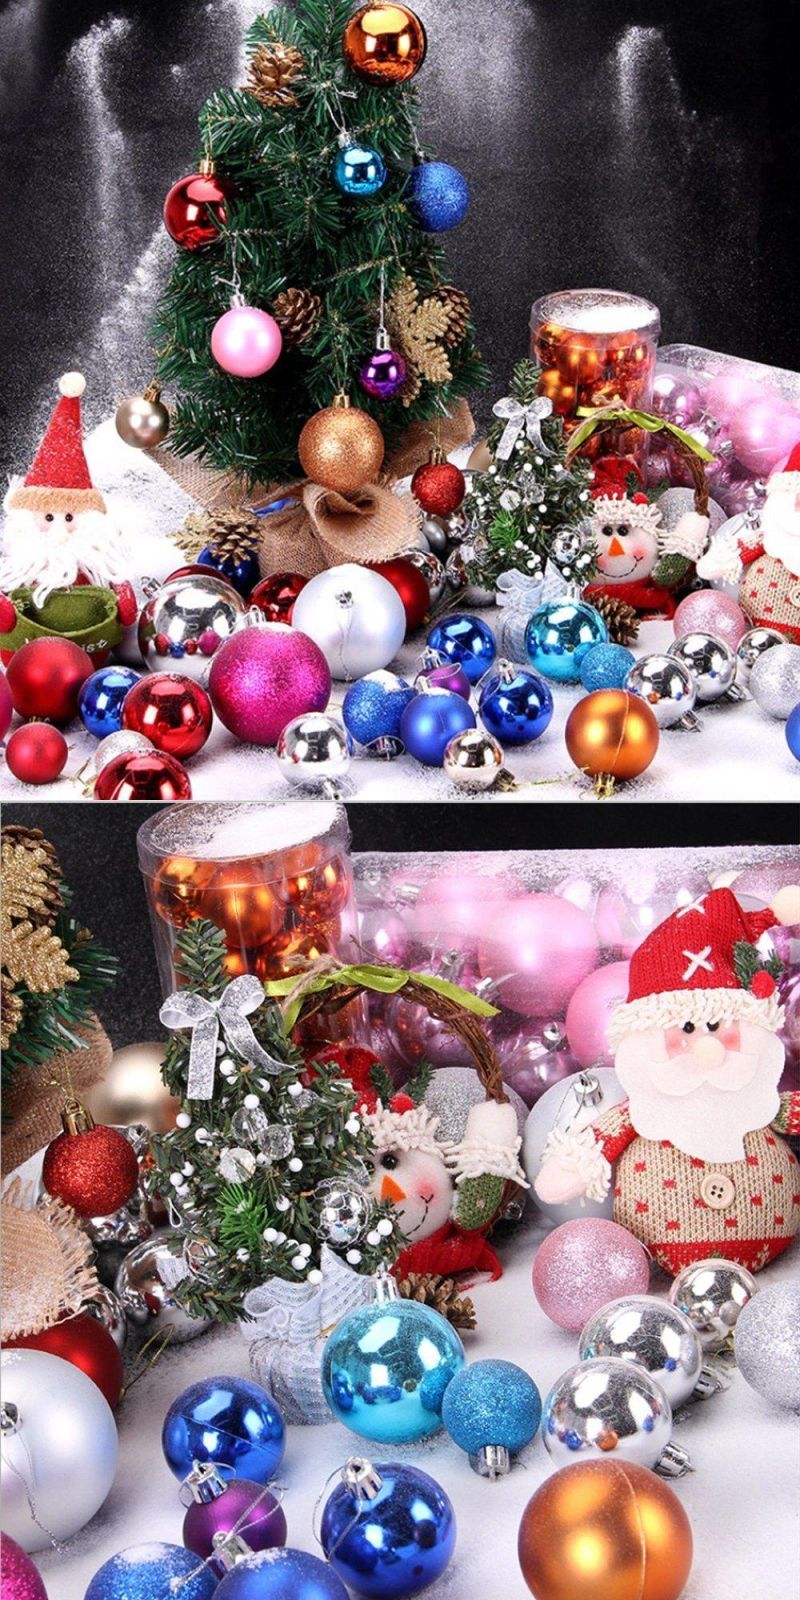 Christmas Hanging Ornaments 6cm High Quality Colorful Shatterproof Christmas Ball